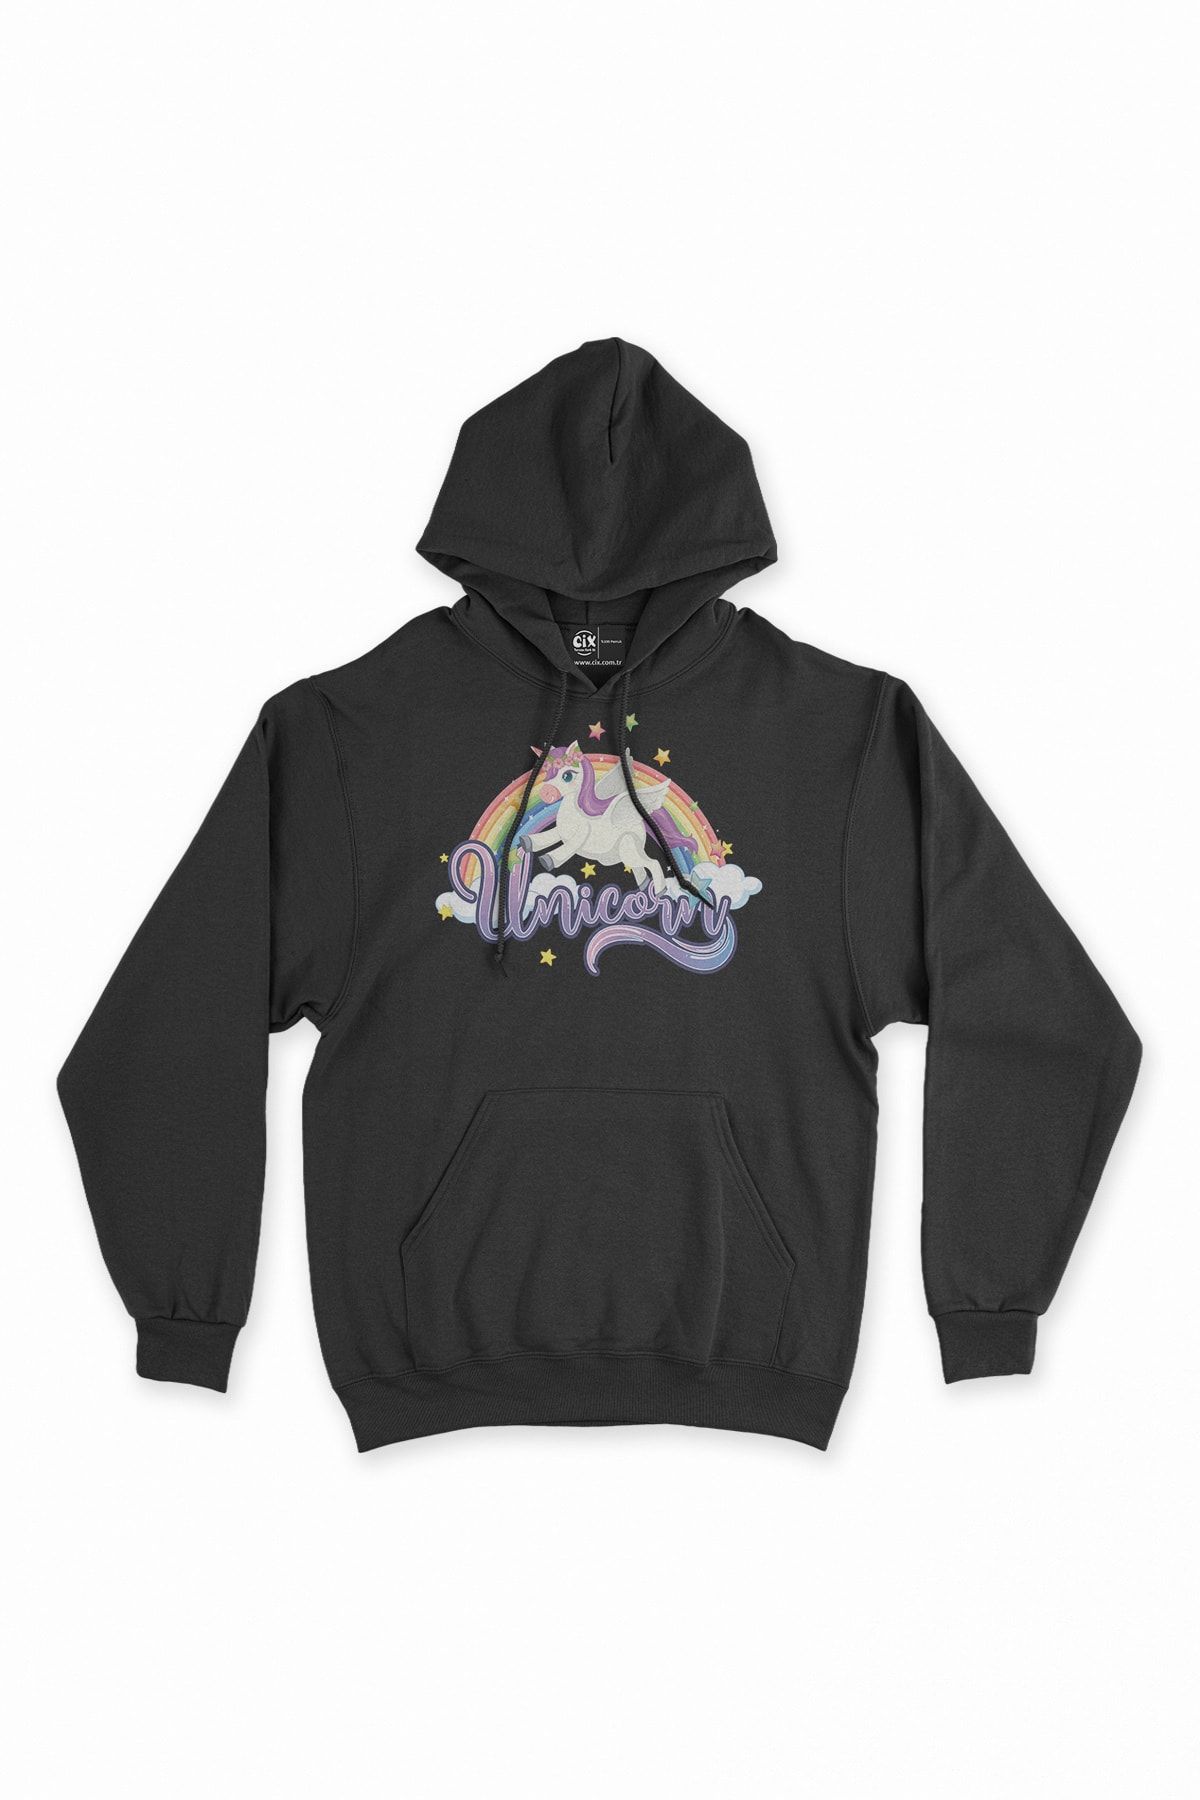 Cix Unicorn Tasarımlı Siyah Sweatshirt Hoodie